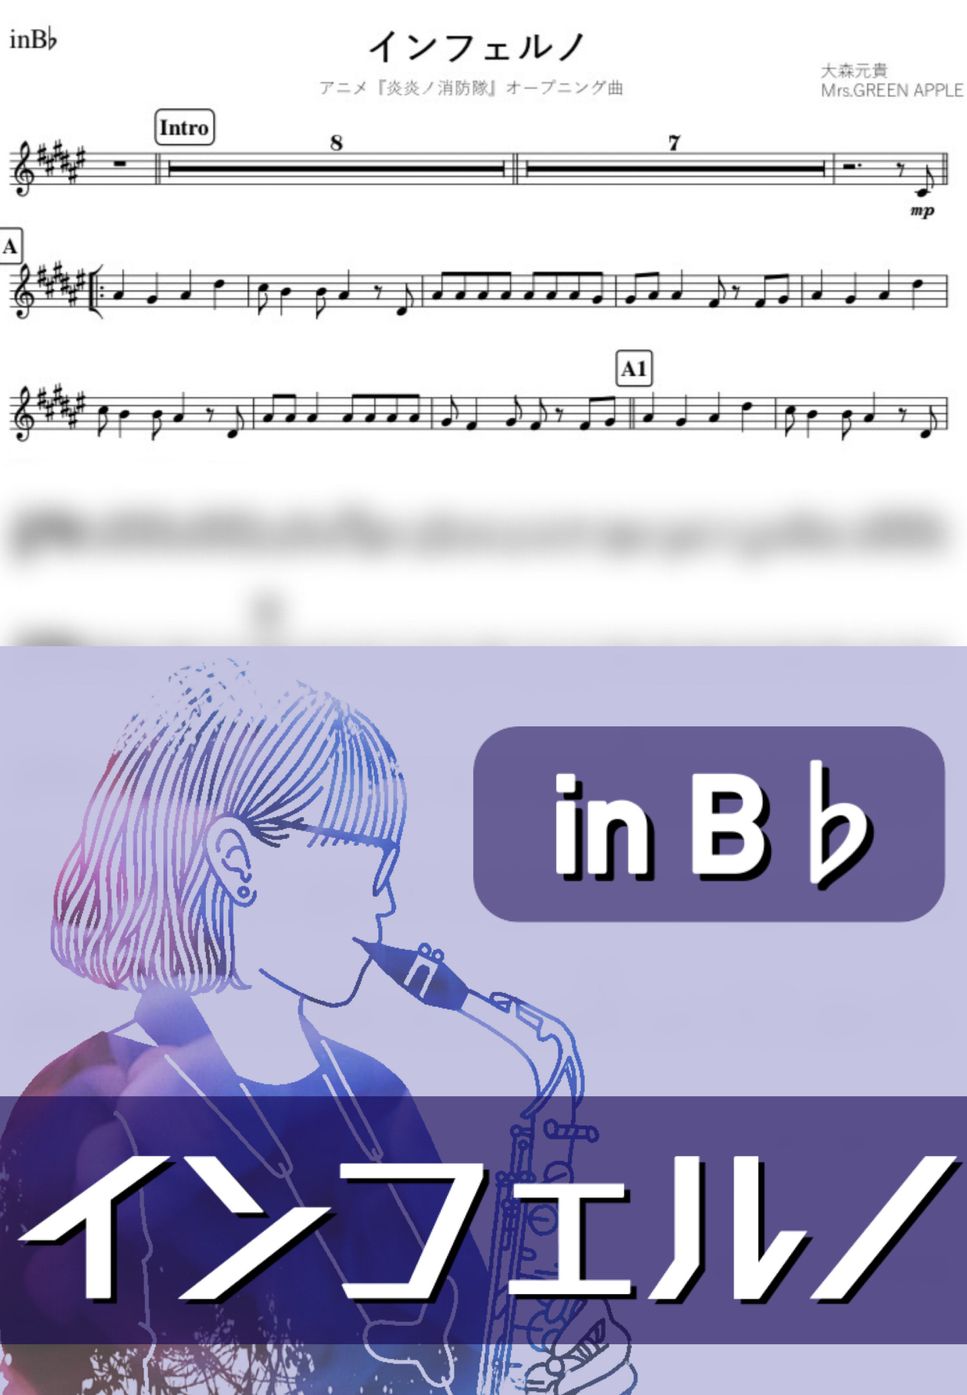 Mrs.GREEN APPLE - インフェルノ (B♭) by kanamusic